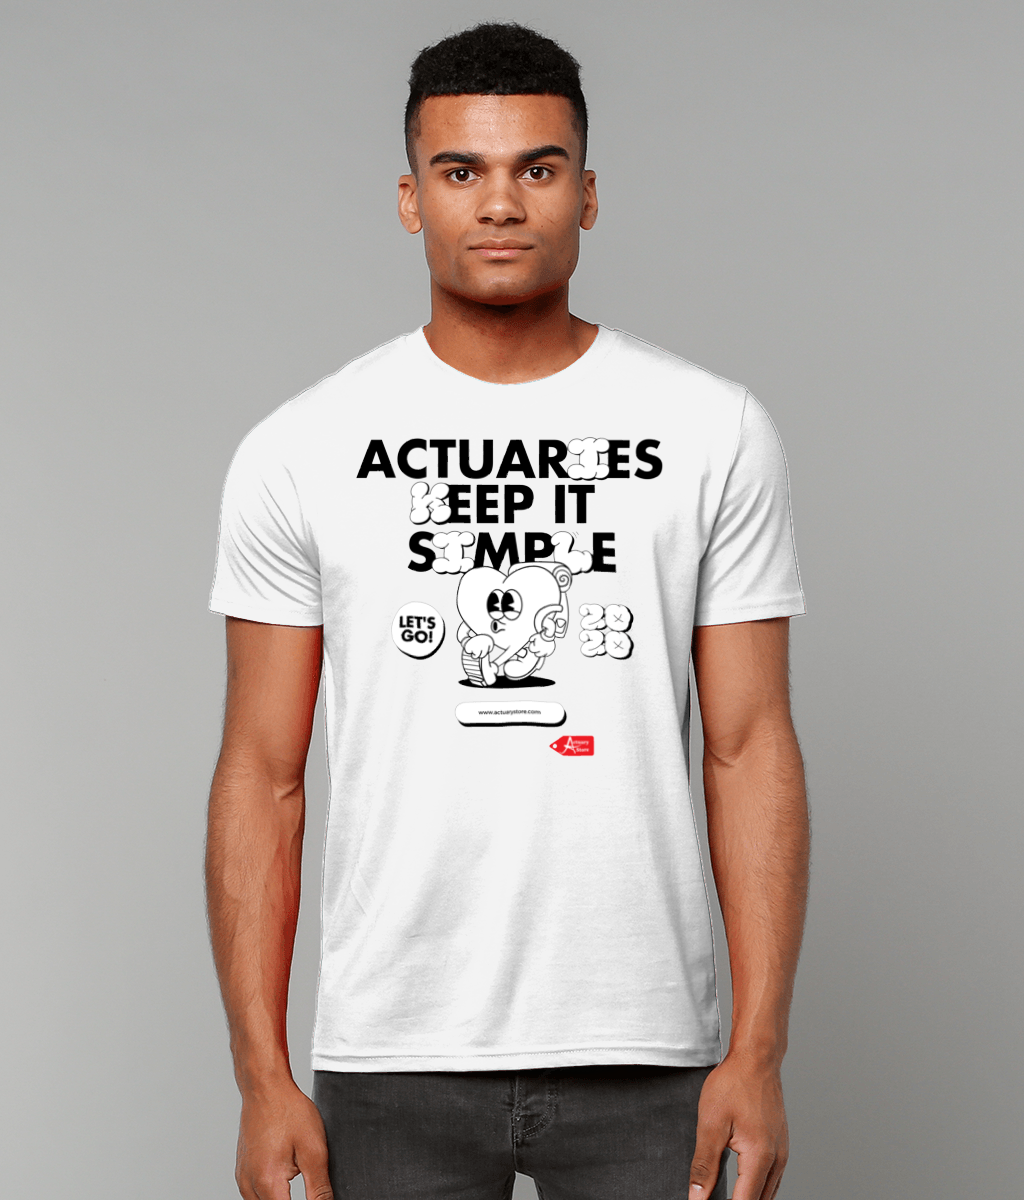 Actuaries Keep It Simple T-Shirt